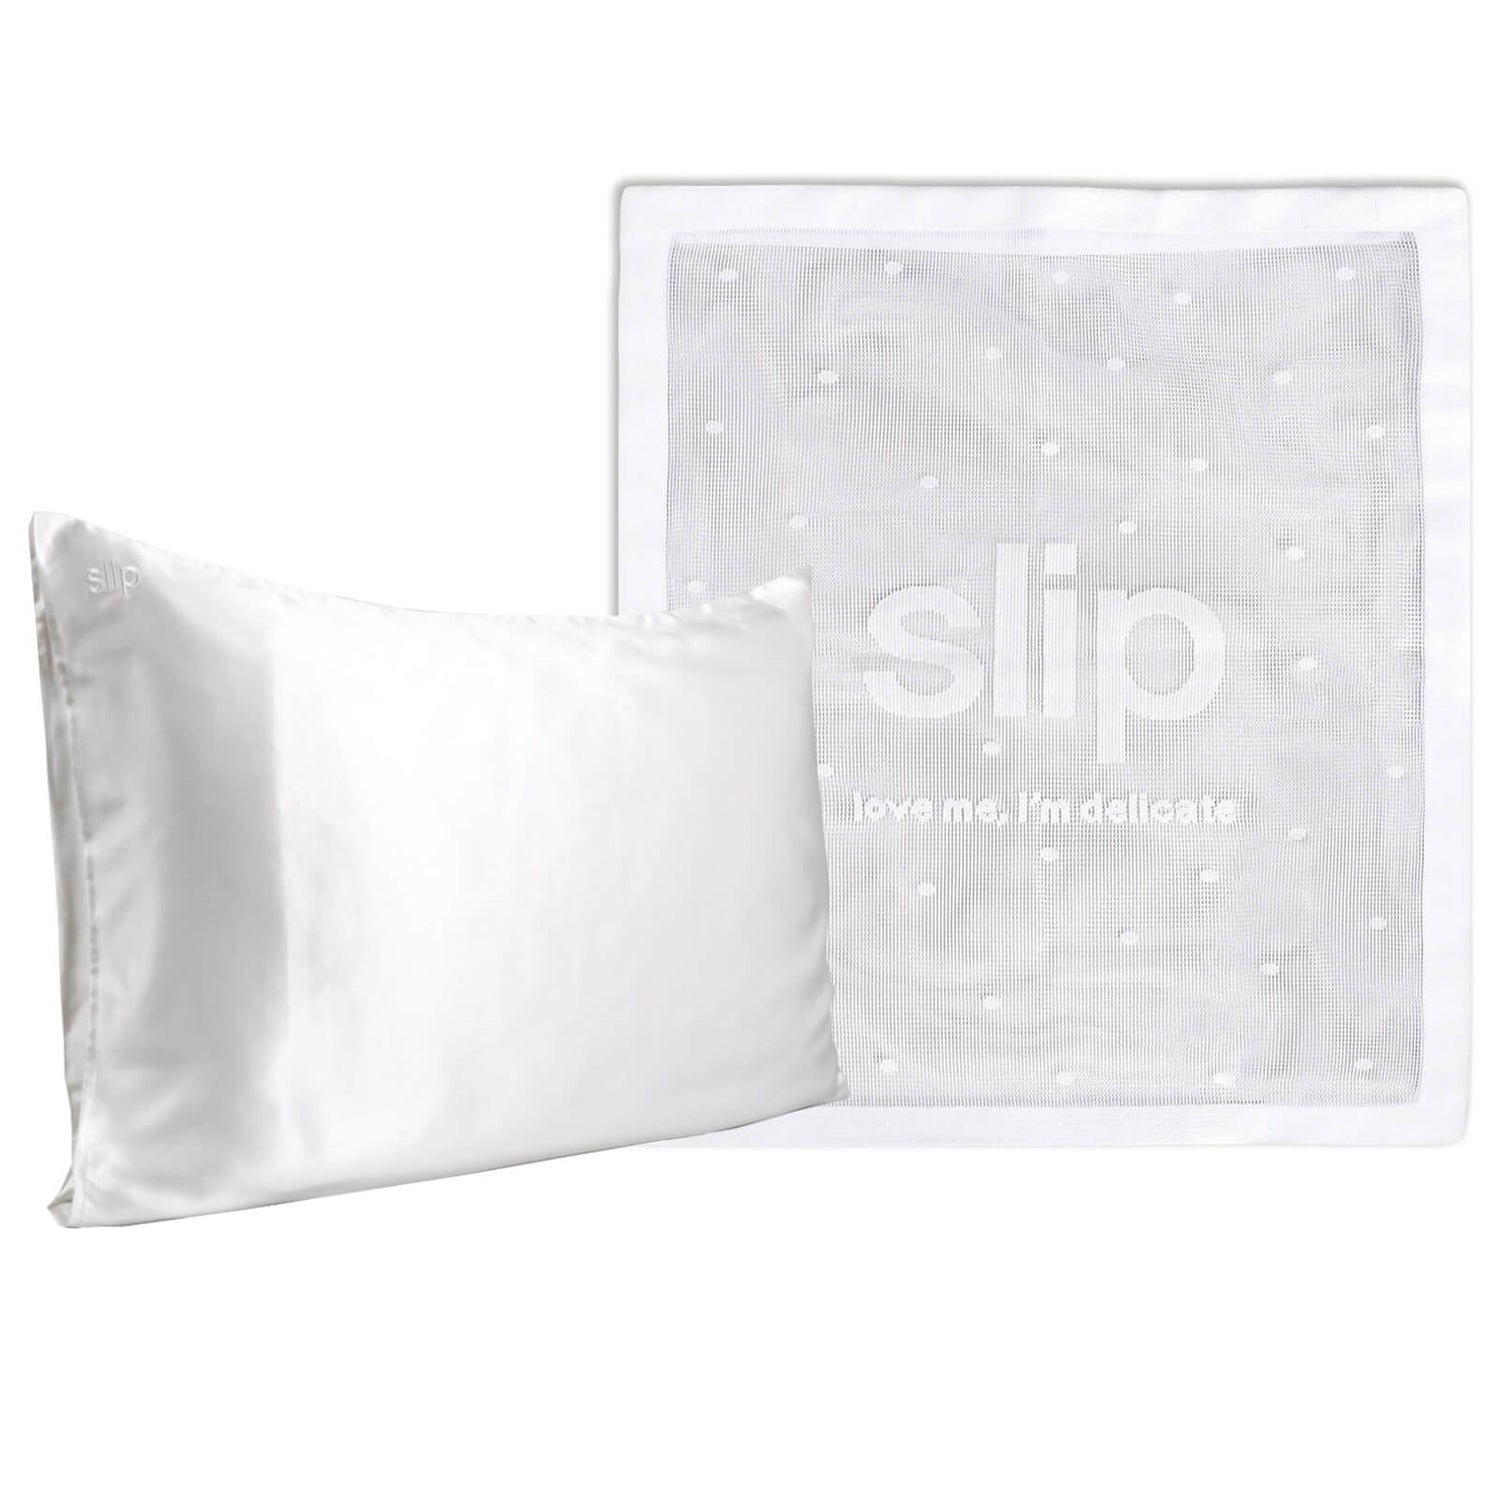 Slip Dermstore Exclusive Silk White Pillowcase Duo and Delicates Bag (Worth $193.00)